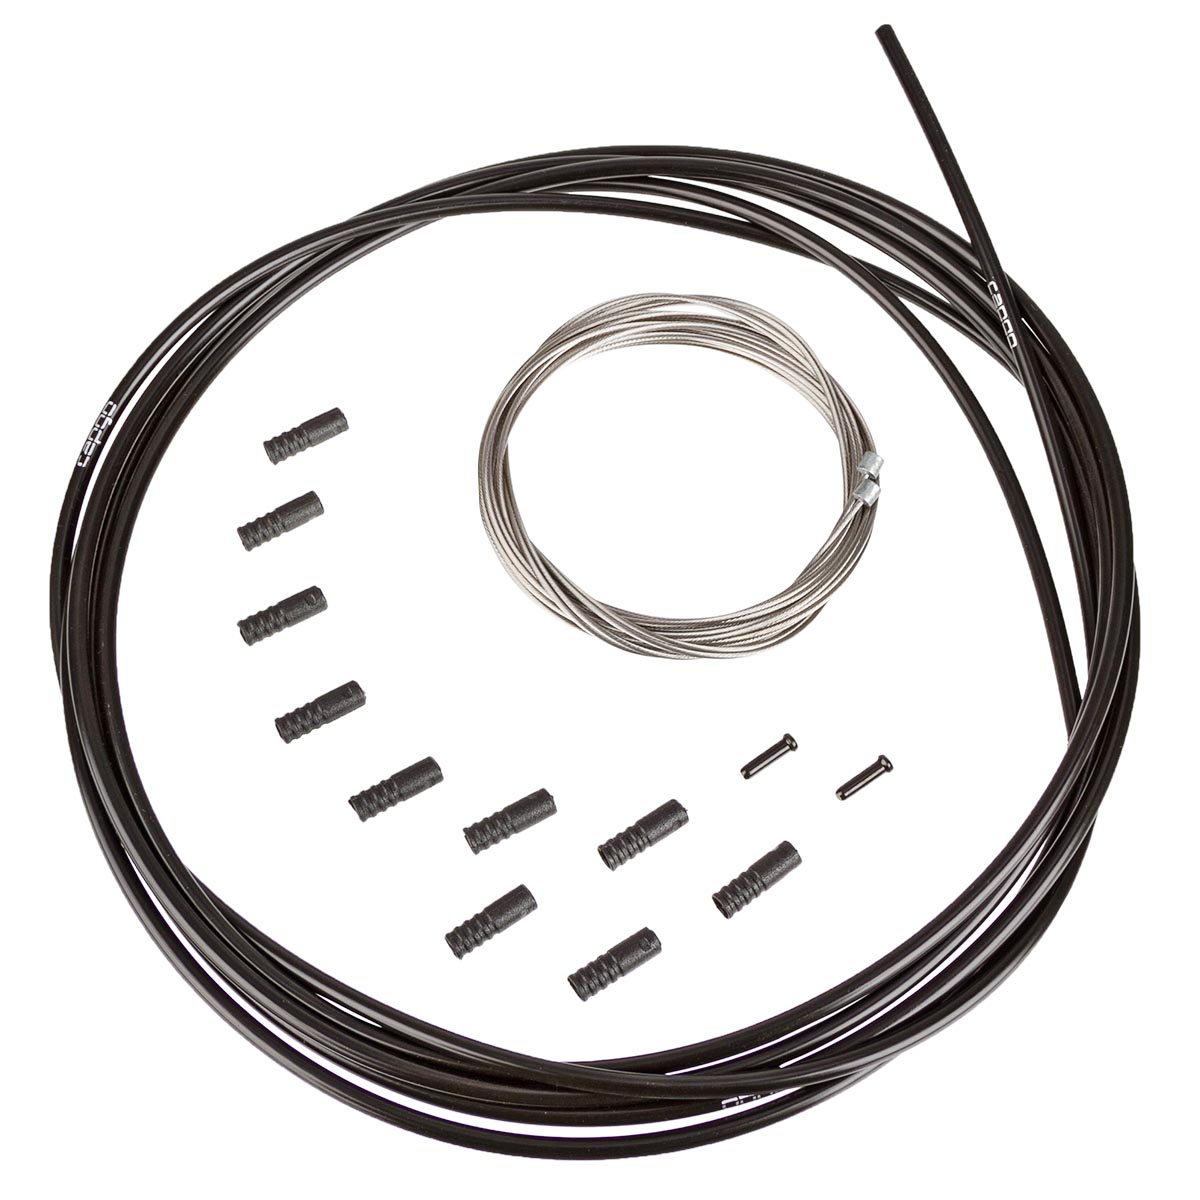 Capgo Cable Systems Jeu de Câble Dérailleur Eco Line for Shimano/SRAM Road & ATB/MTB, black, long